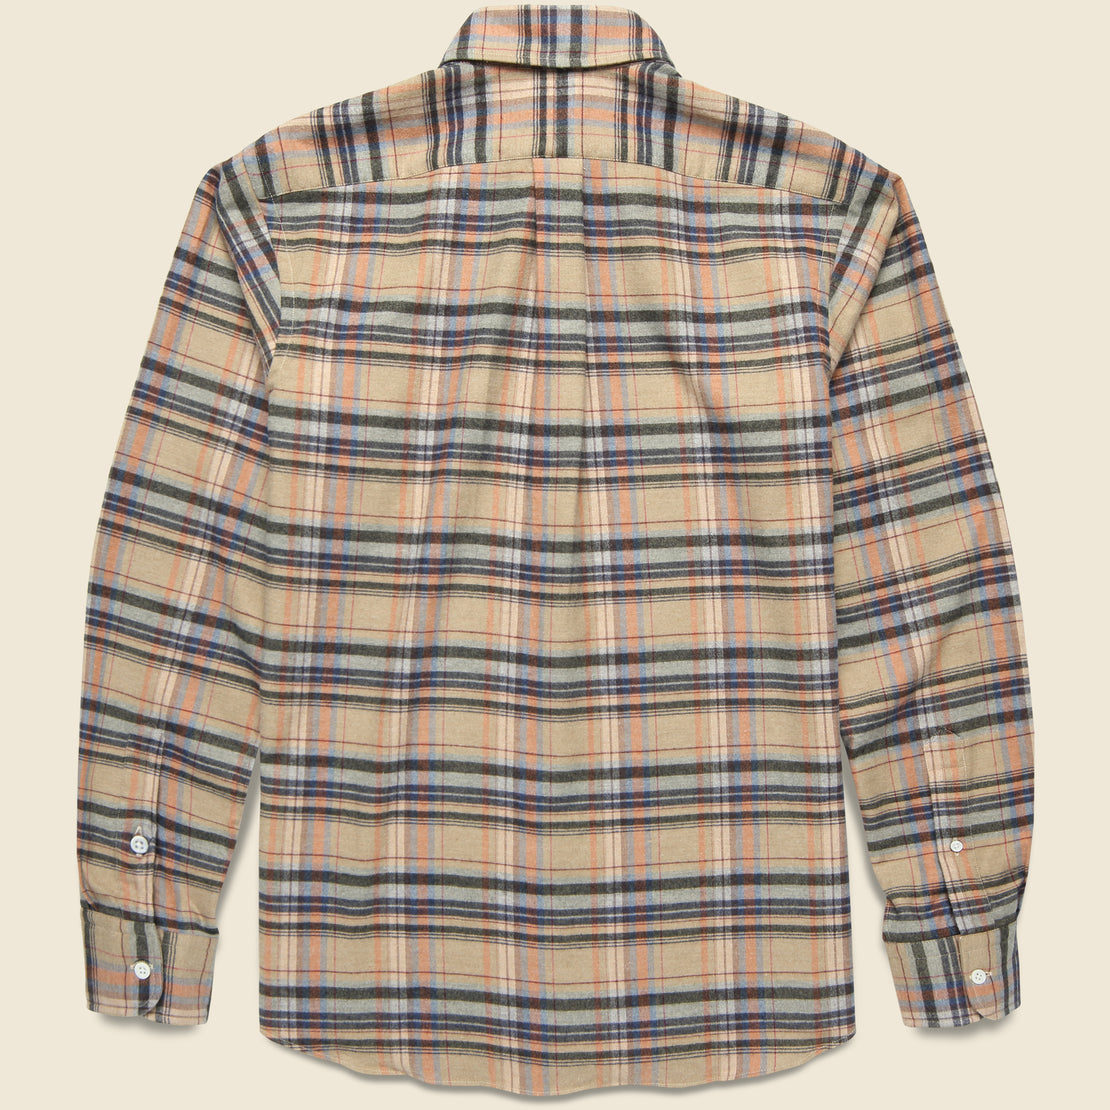 Check Twill Flannel Shirt -  Tan/Grey/Blue - Hamilton Shirt Co. - STAG Provisions - Tops - L/S Woven - Plaid